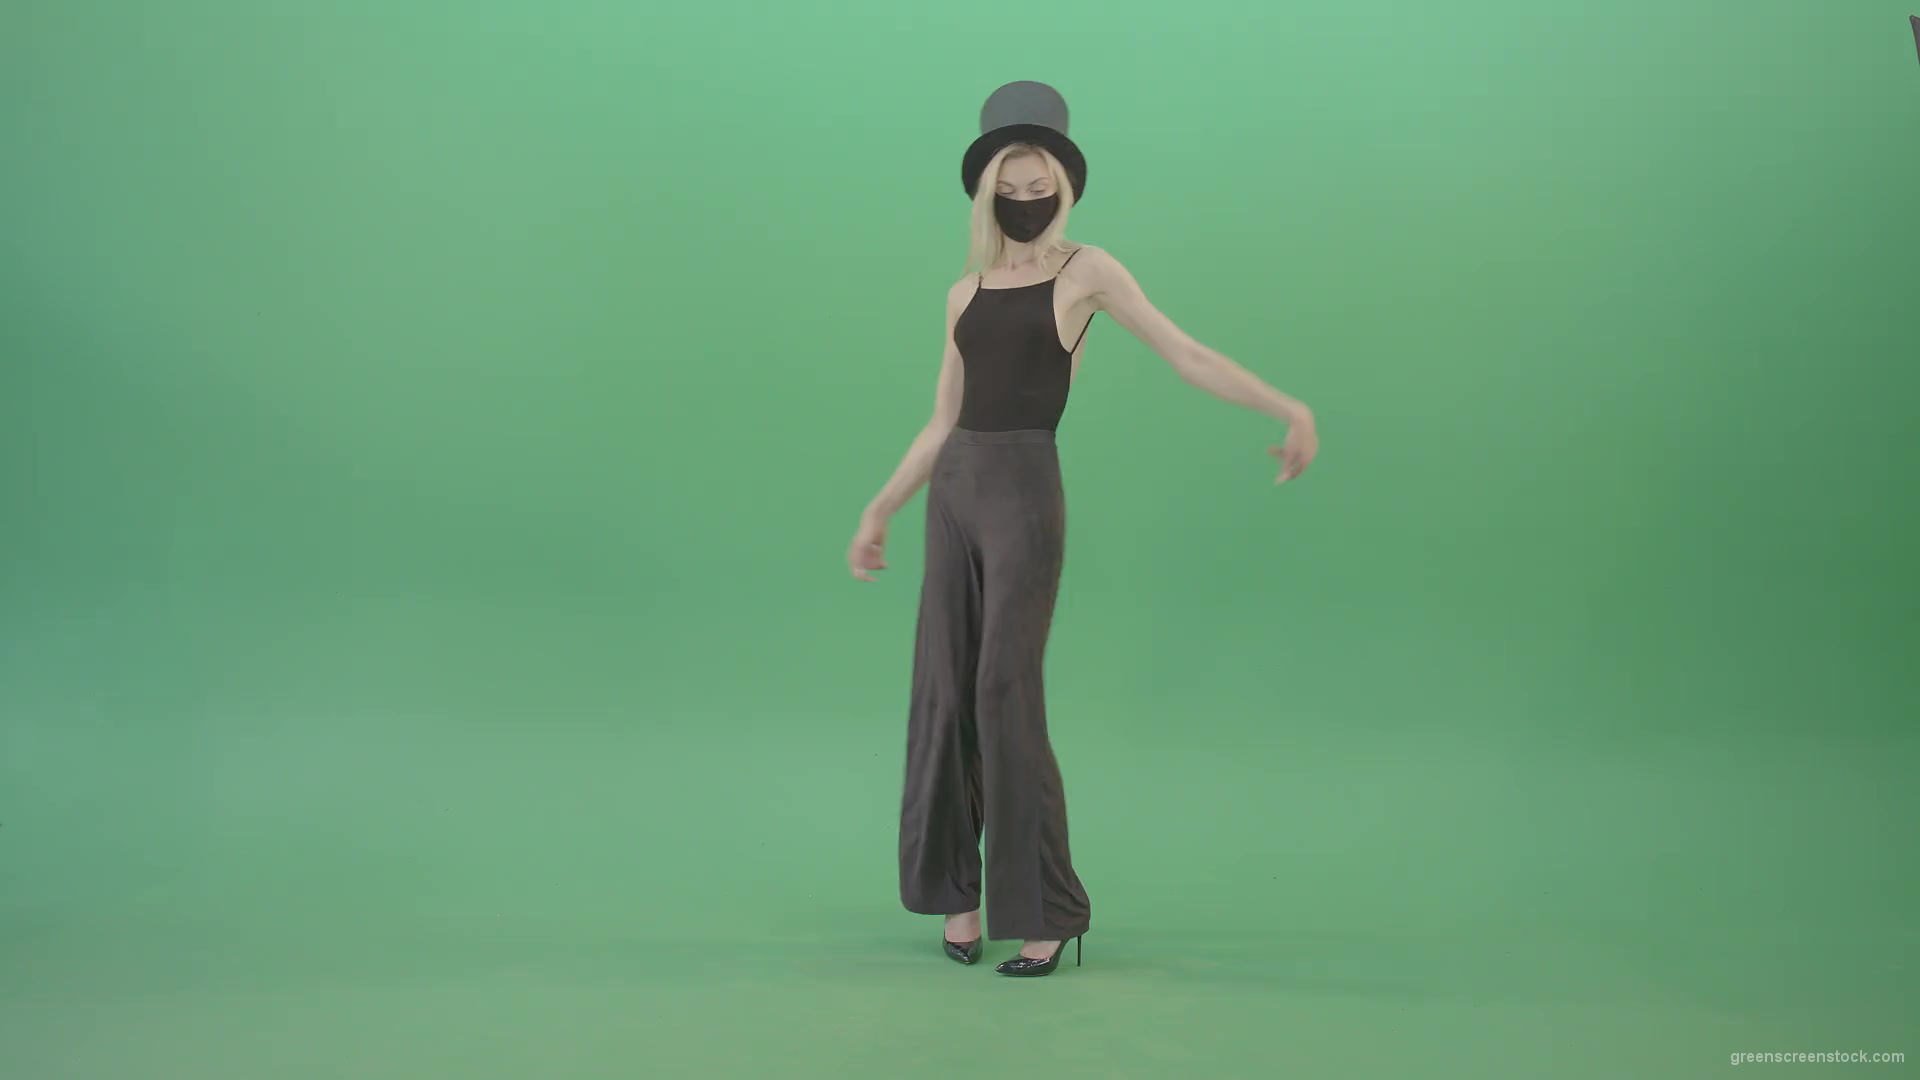 Blonde-Girl-in-Black-Cylinder-Hat-dancing-slowly-in-Corona-VIrus-Mask-on-green-screen-VIdeo-Footage-1920_001 Green Screen Stock